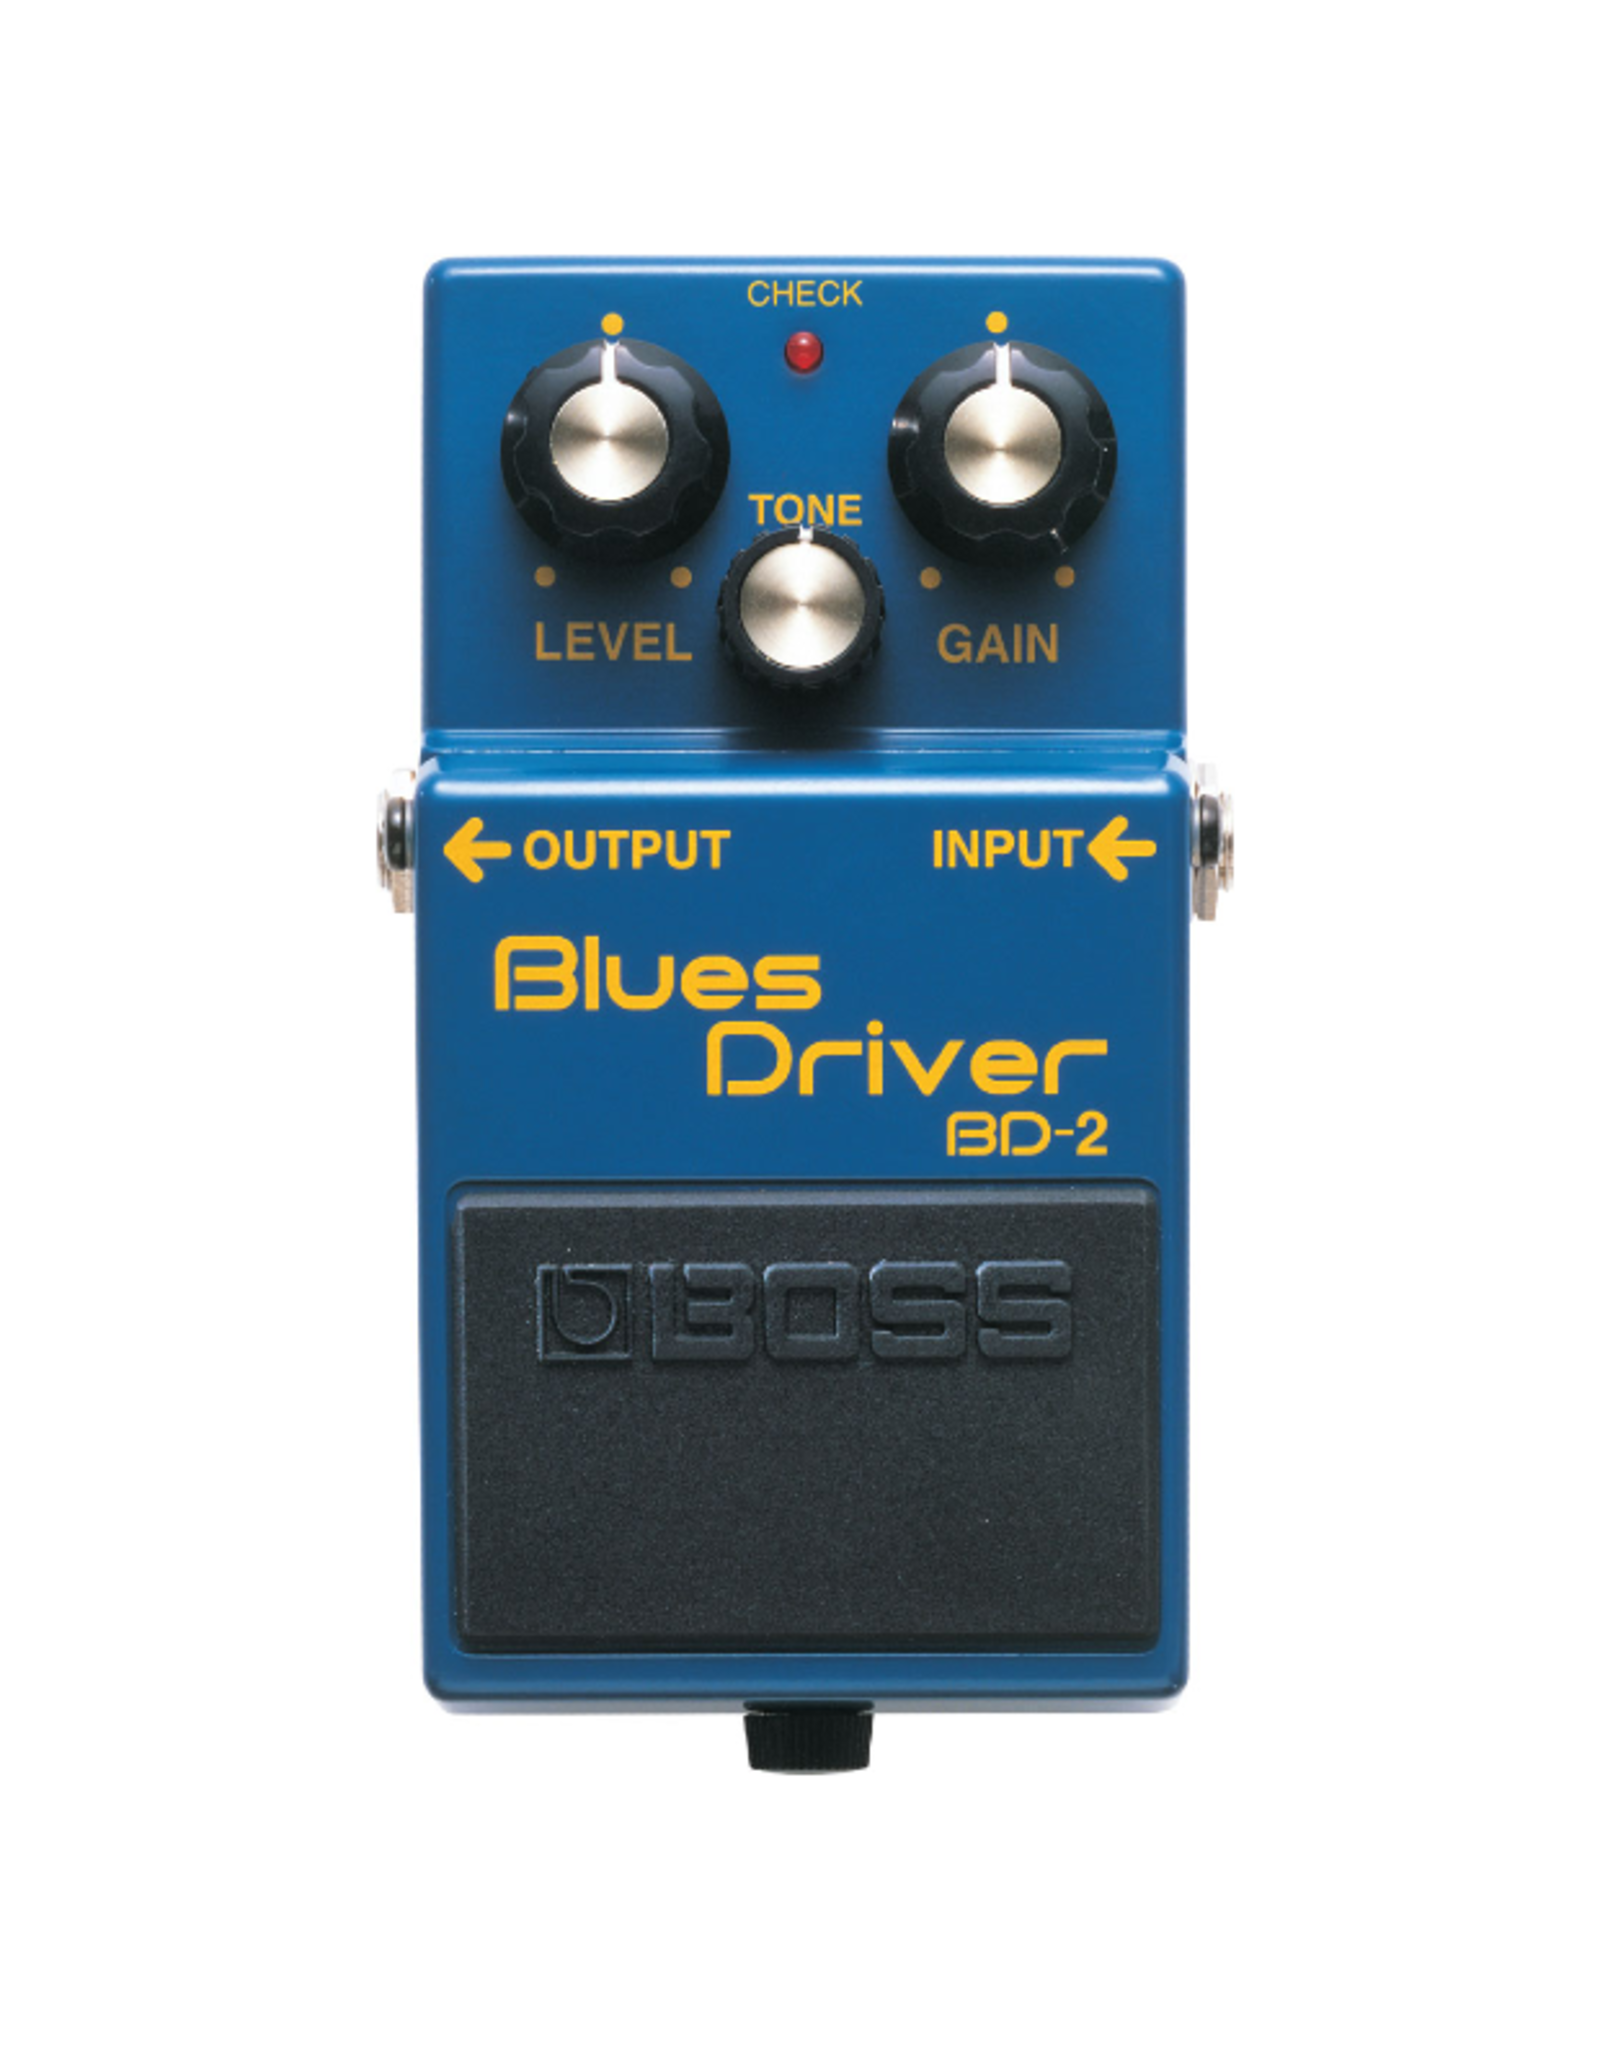 Boss Boss BD-2 Blues Driver - Store Demo Model